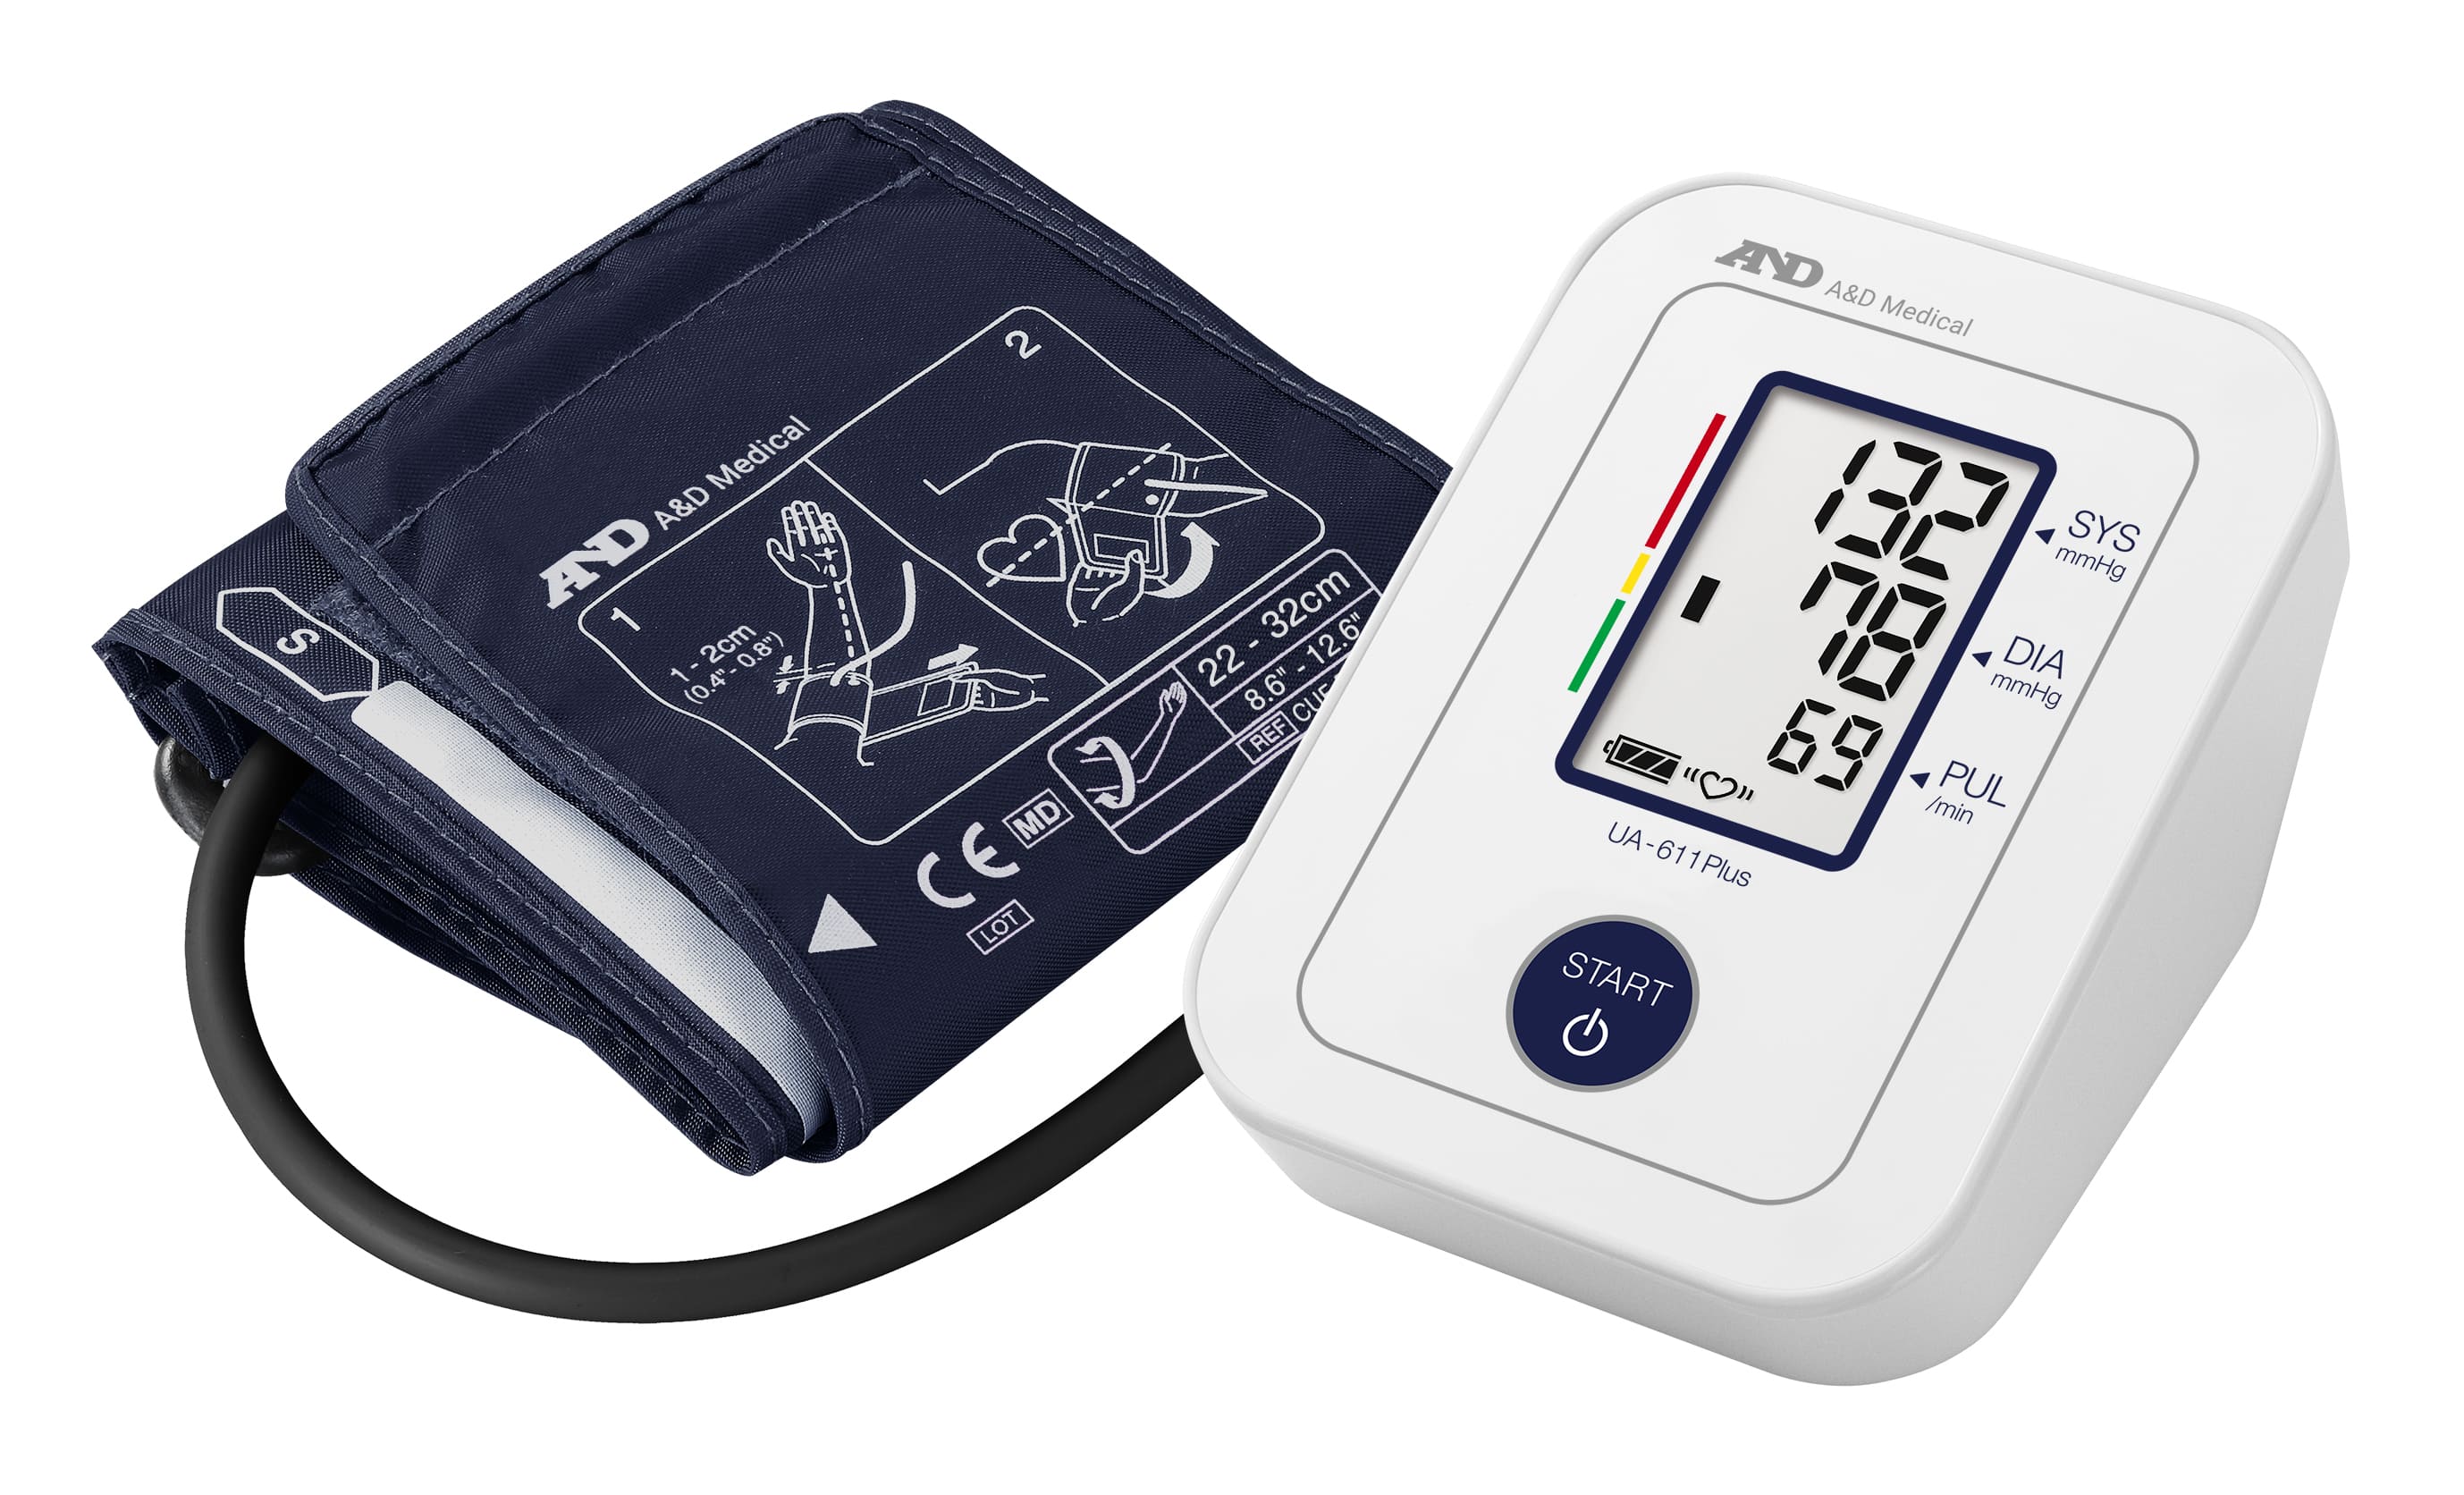 A&D Medical Essential Upper Arm Blood Pressure Monitor